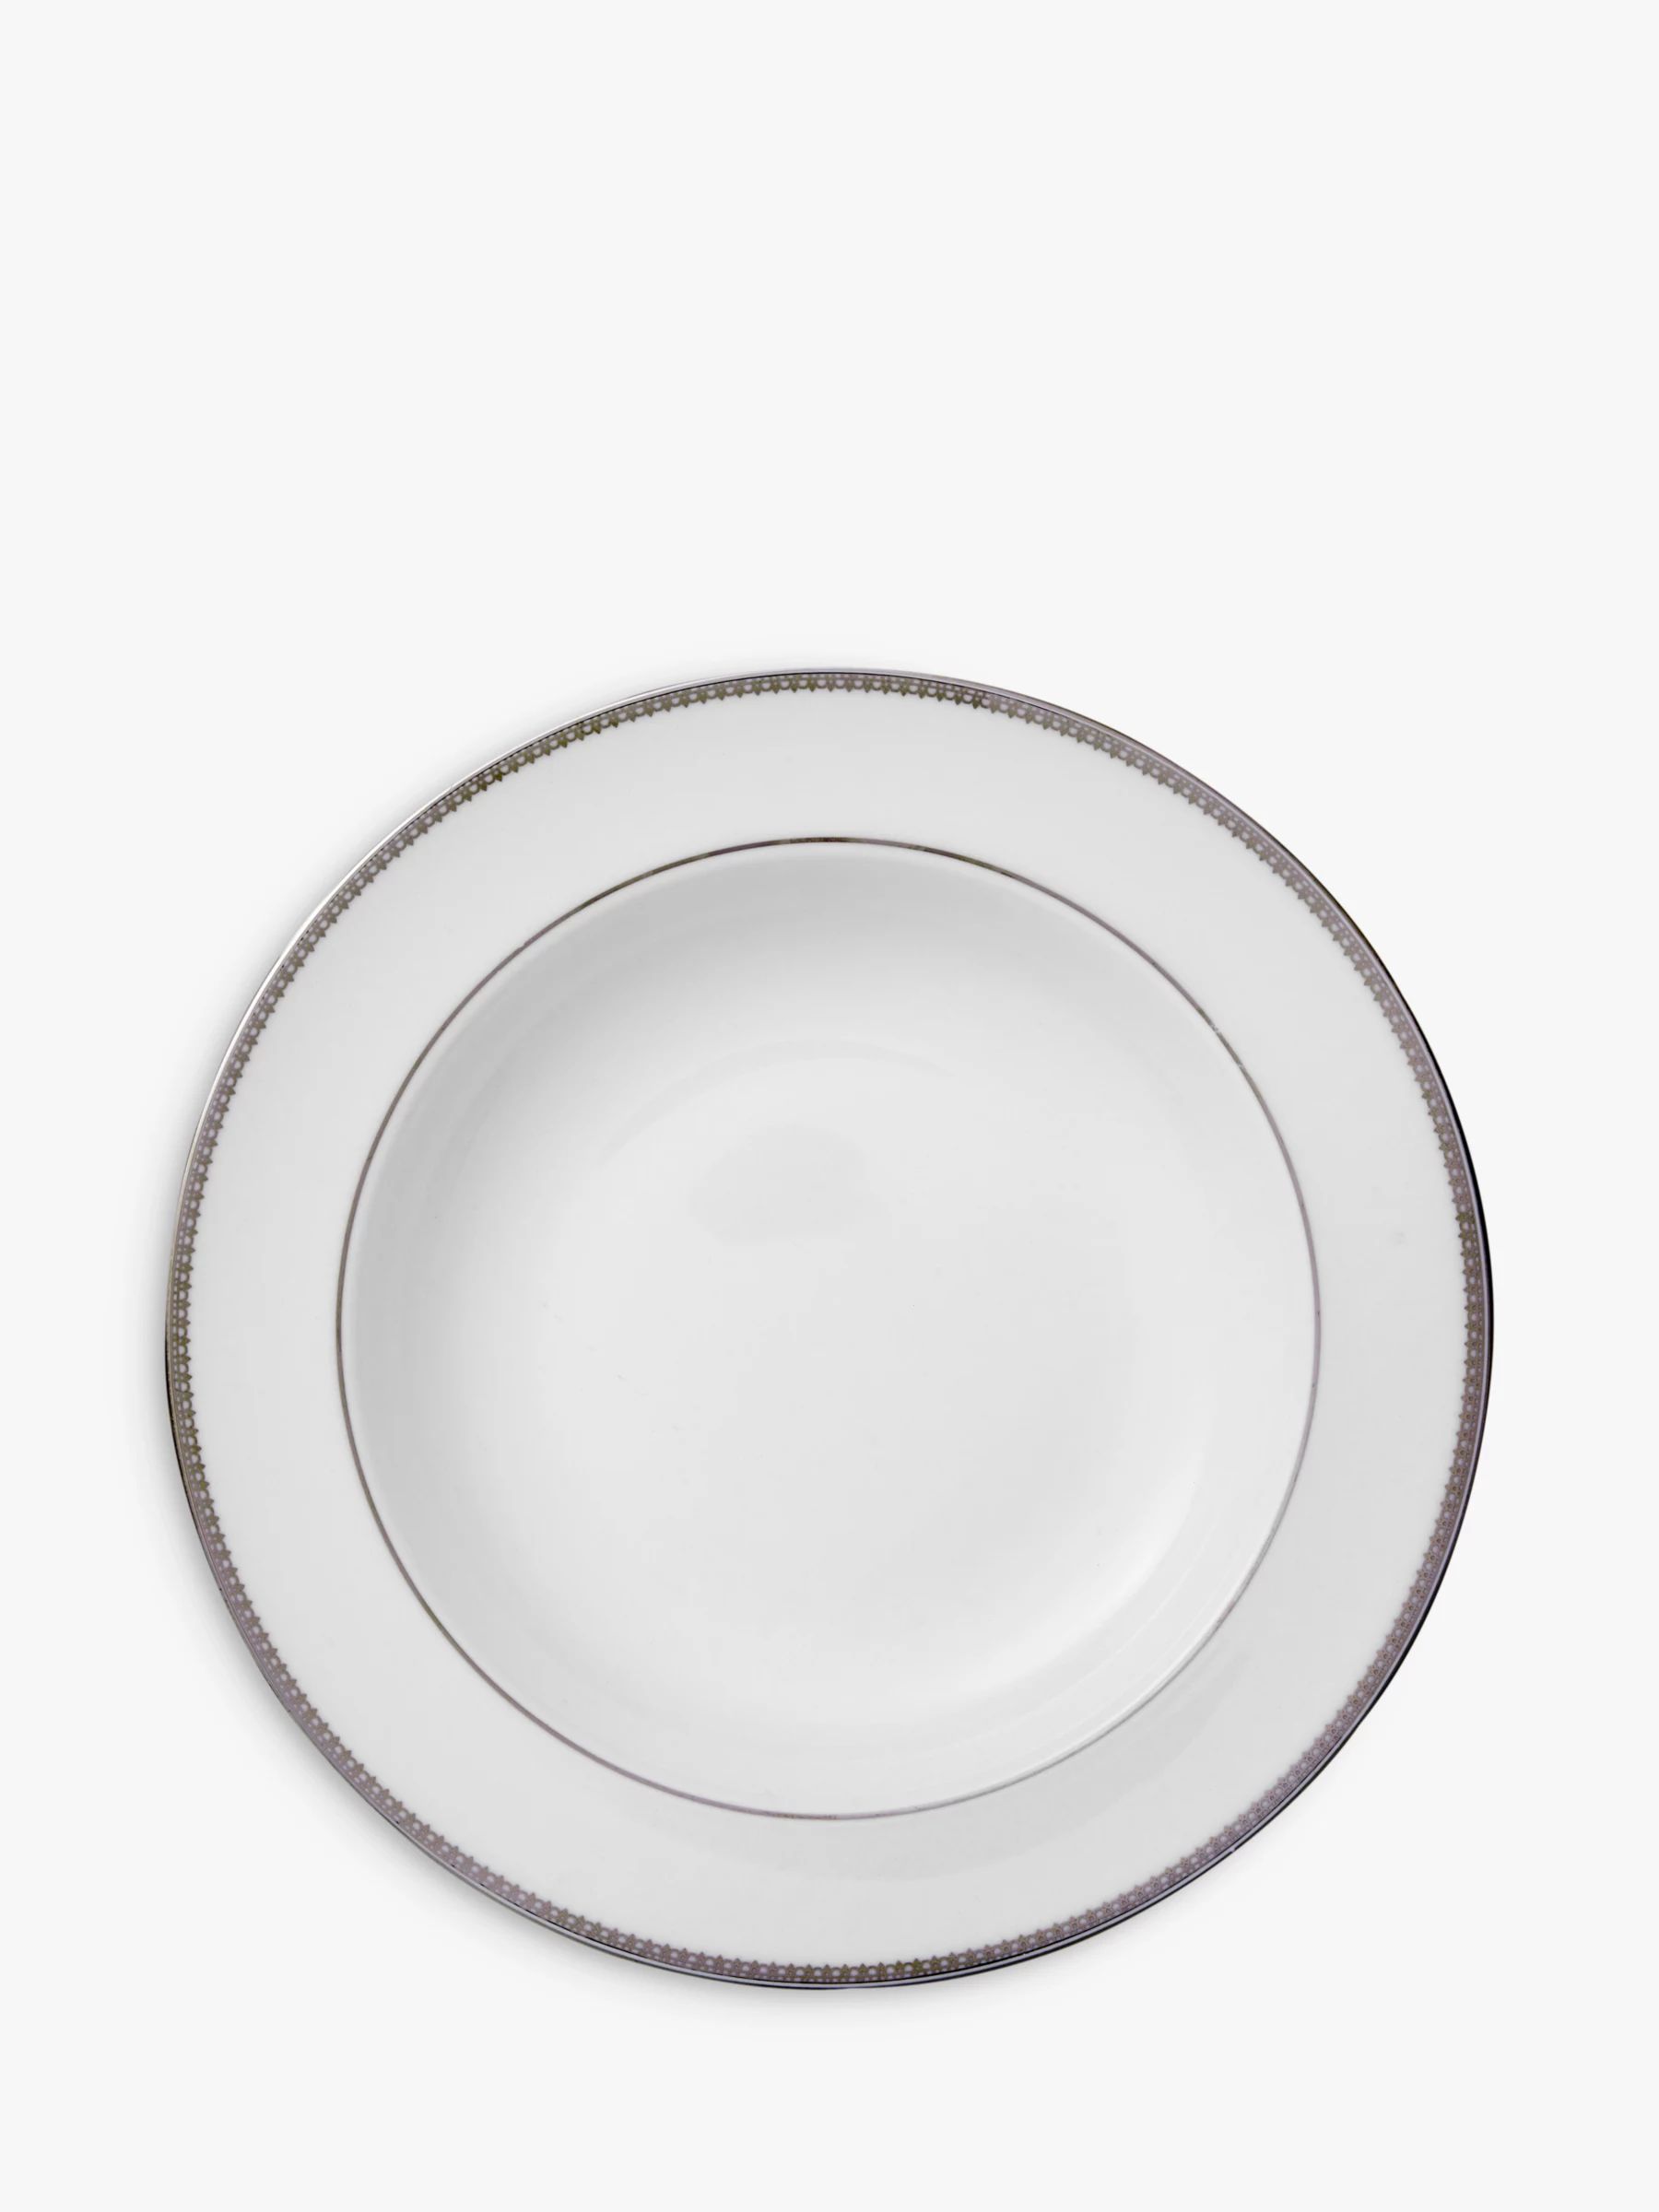 Vera Wang for Wedgwood Lace Platinum 23cm Soup Plate, White | John Lewis (UK)